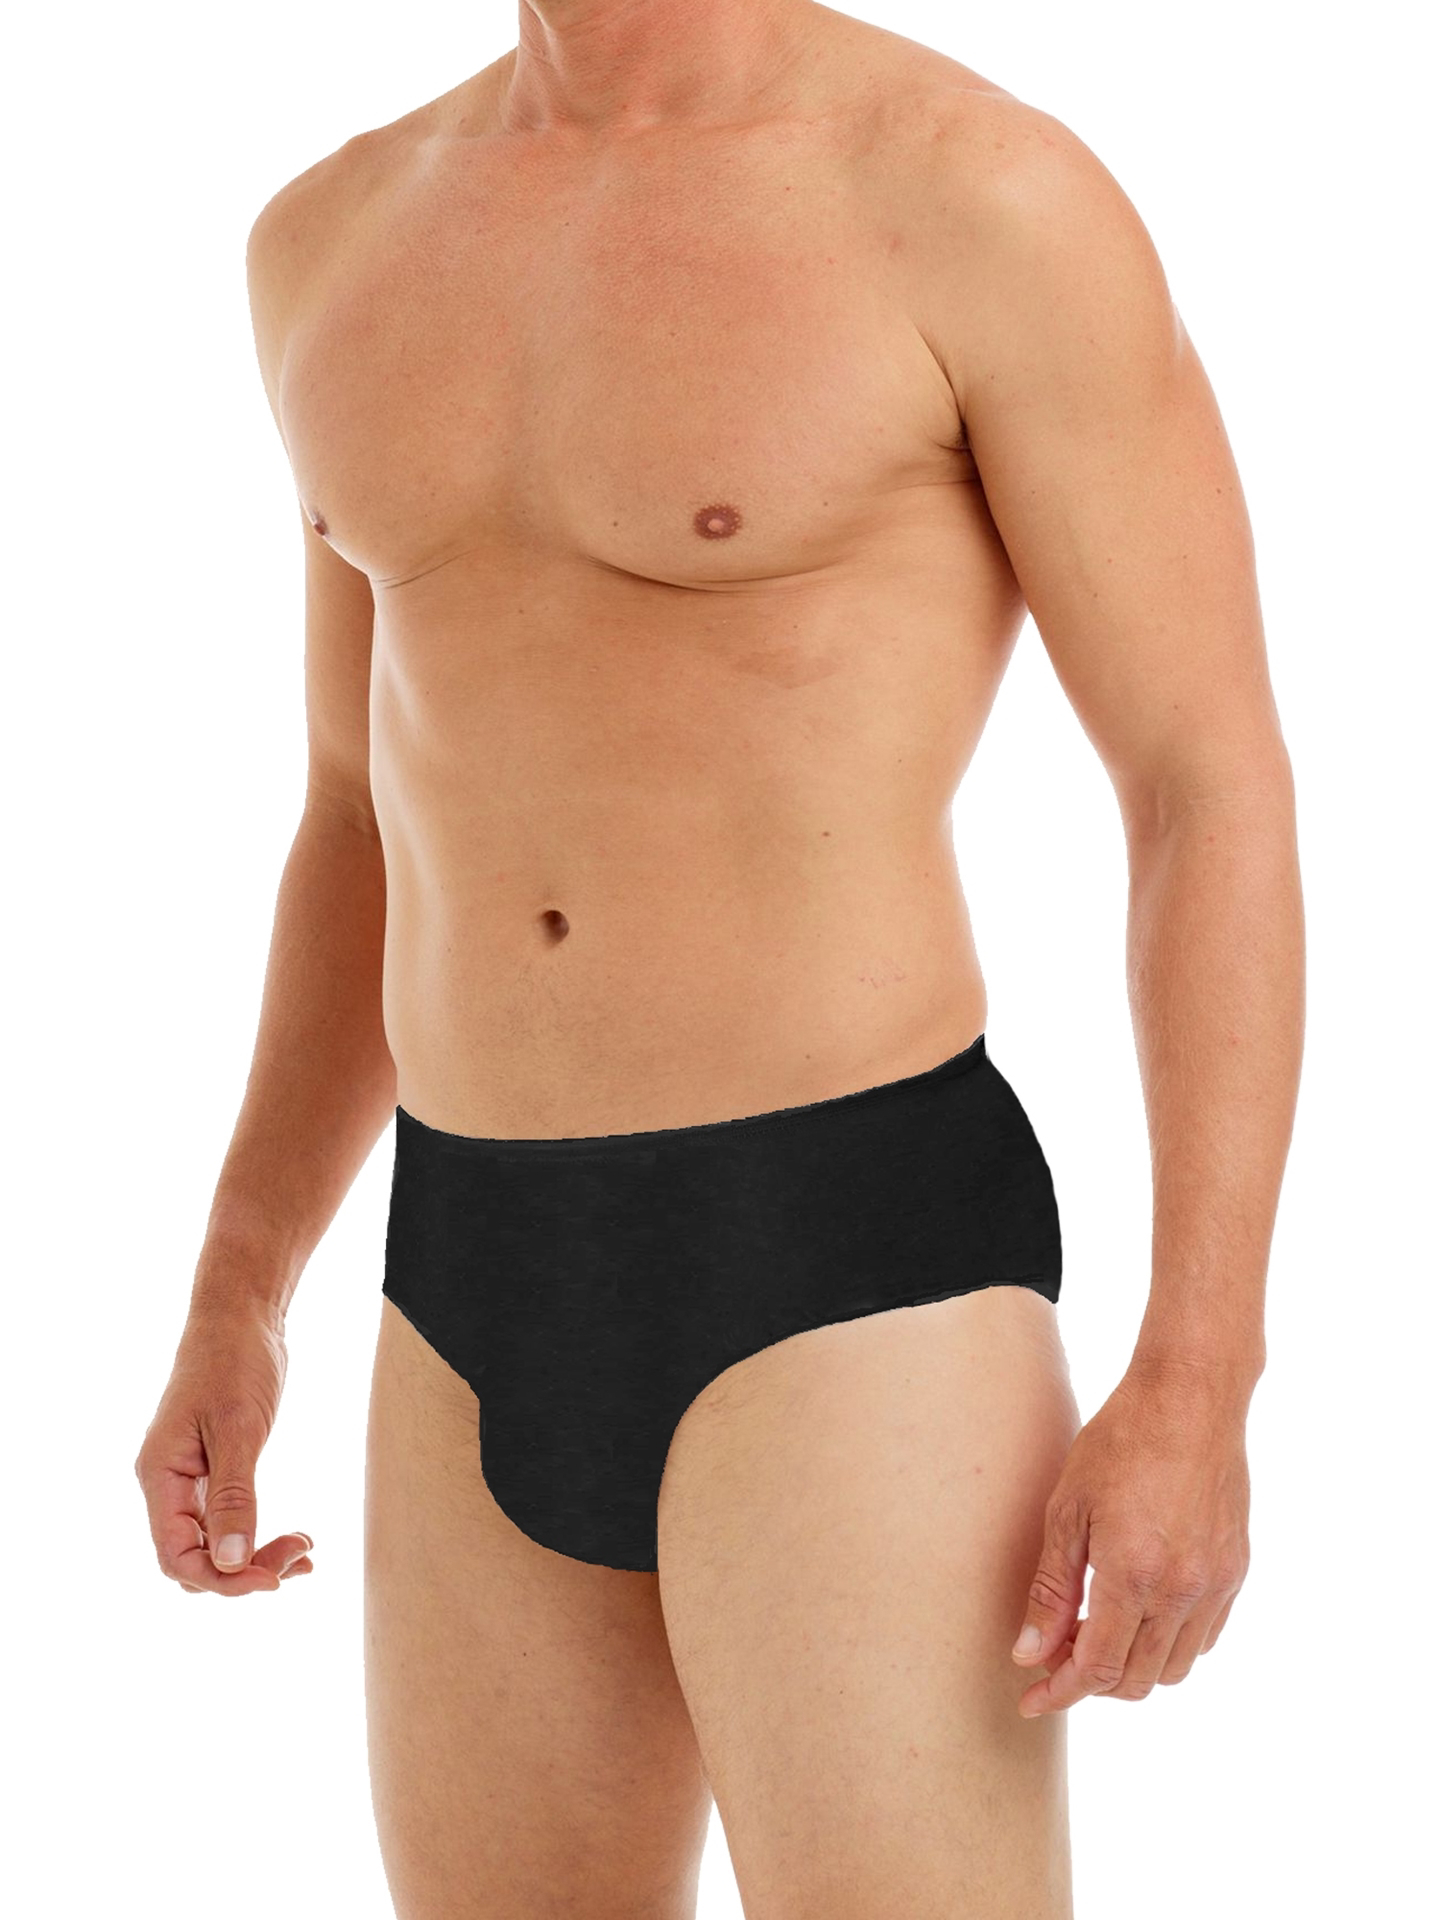 Men's Disposable Nonwoven Underwear Portable Briefs for Traveling